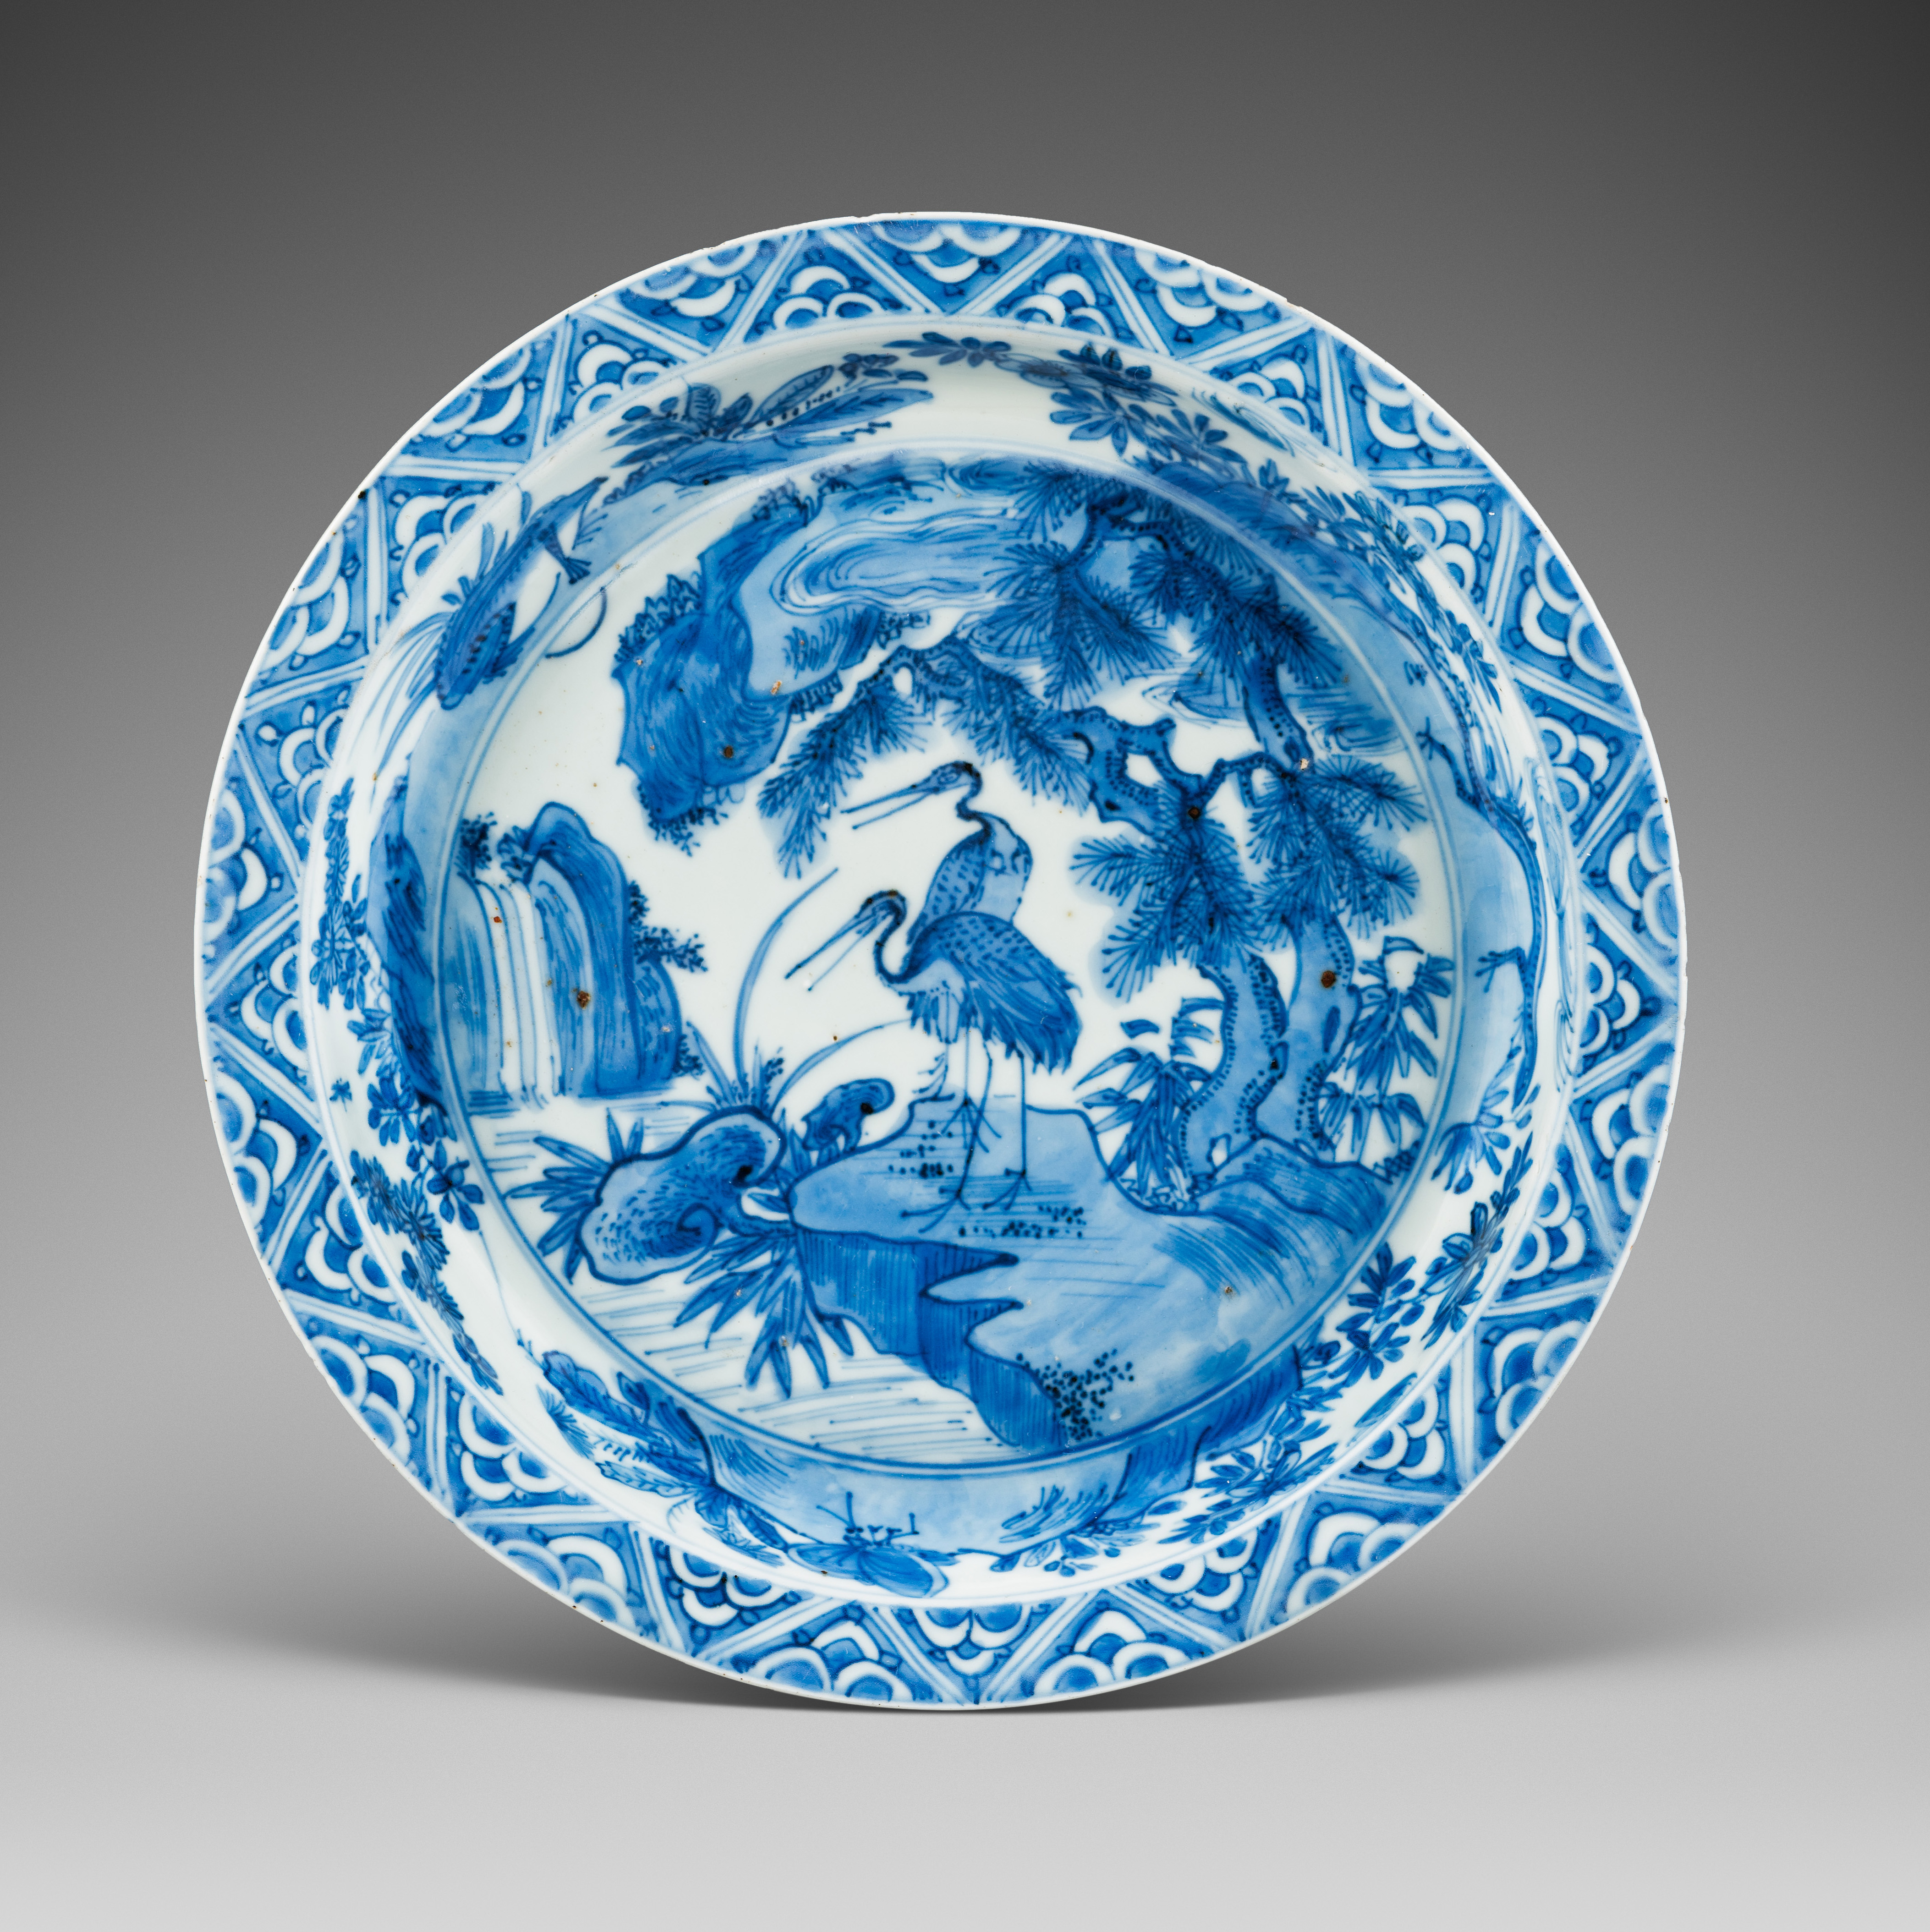 Porcelain China, Ming dynasty, Wanli reign (1573-1620), China